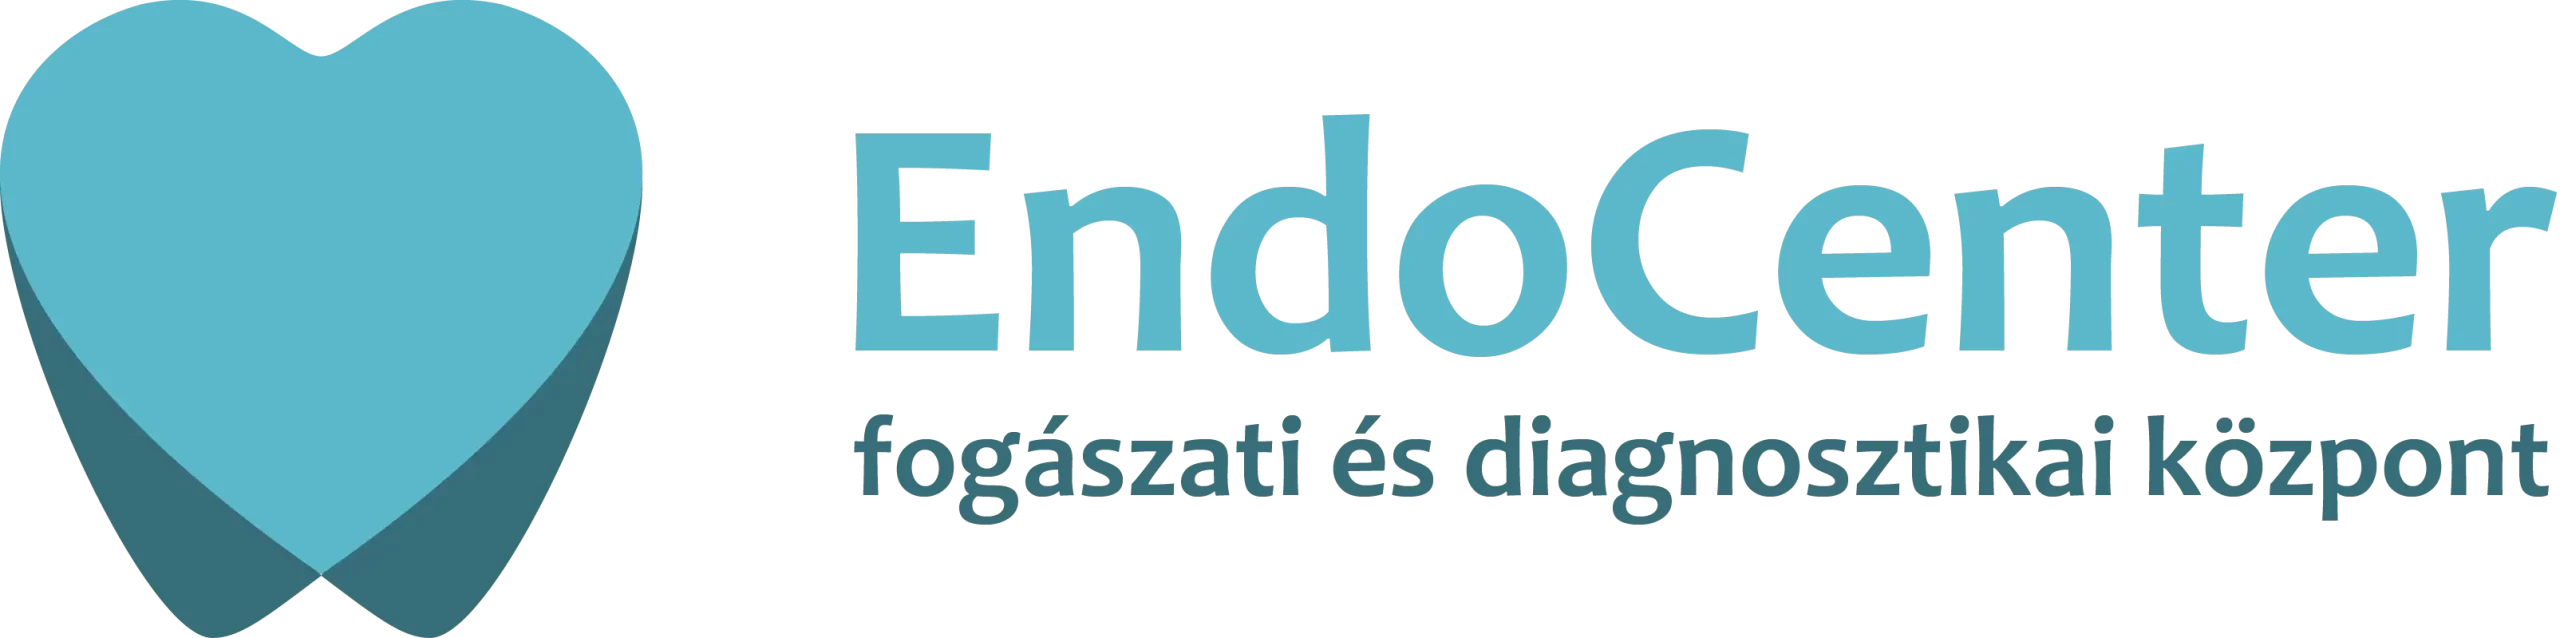 Logo_endocenter_fulltext_atlatszo